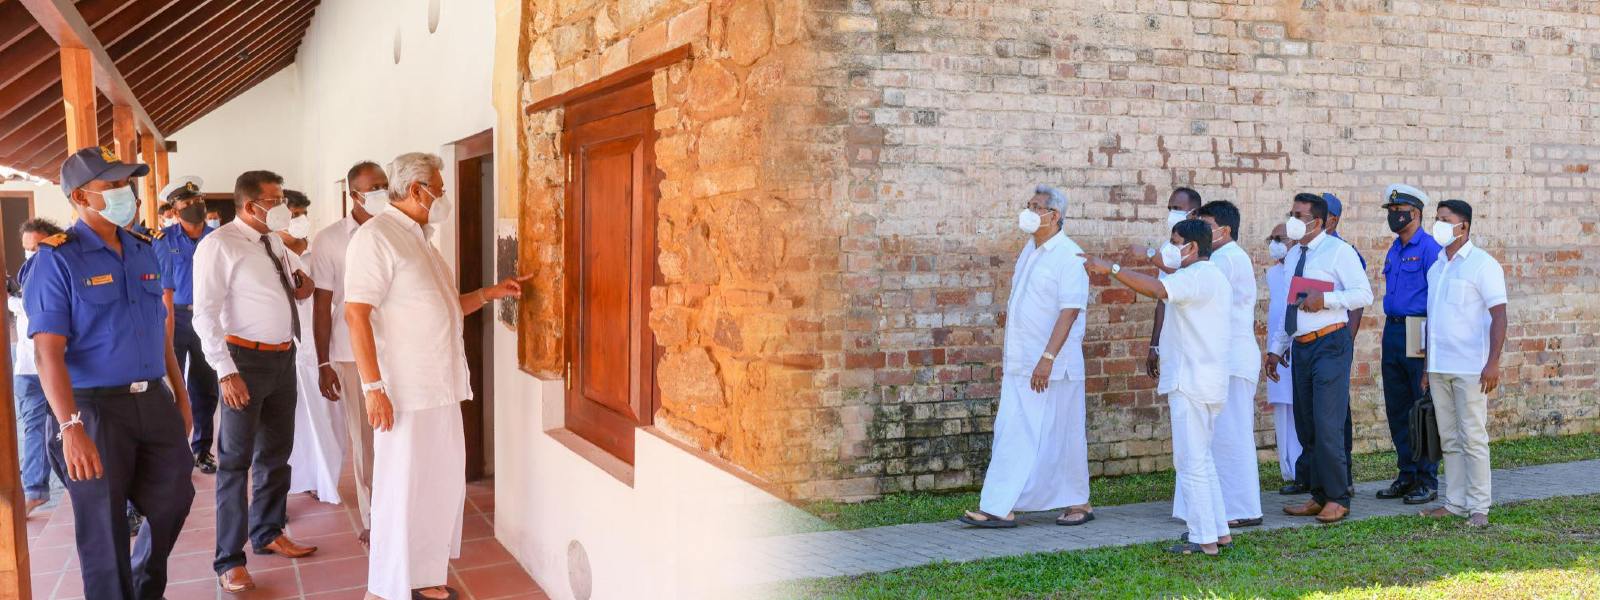 President inspects renovations of 400 year old Ehelepola Walawwa